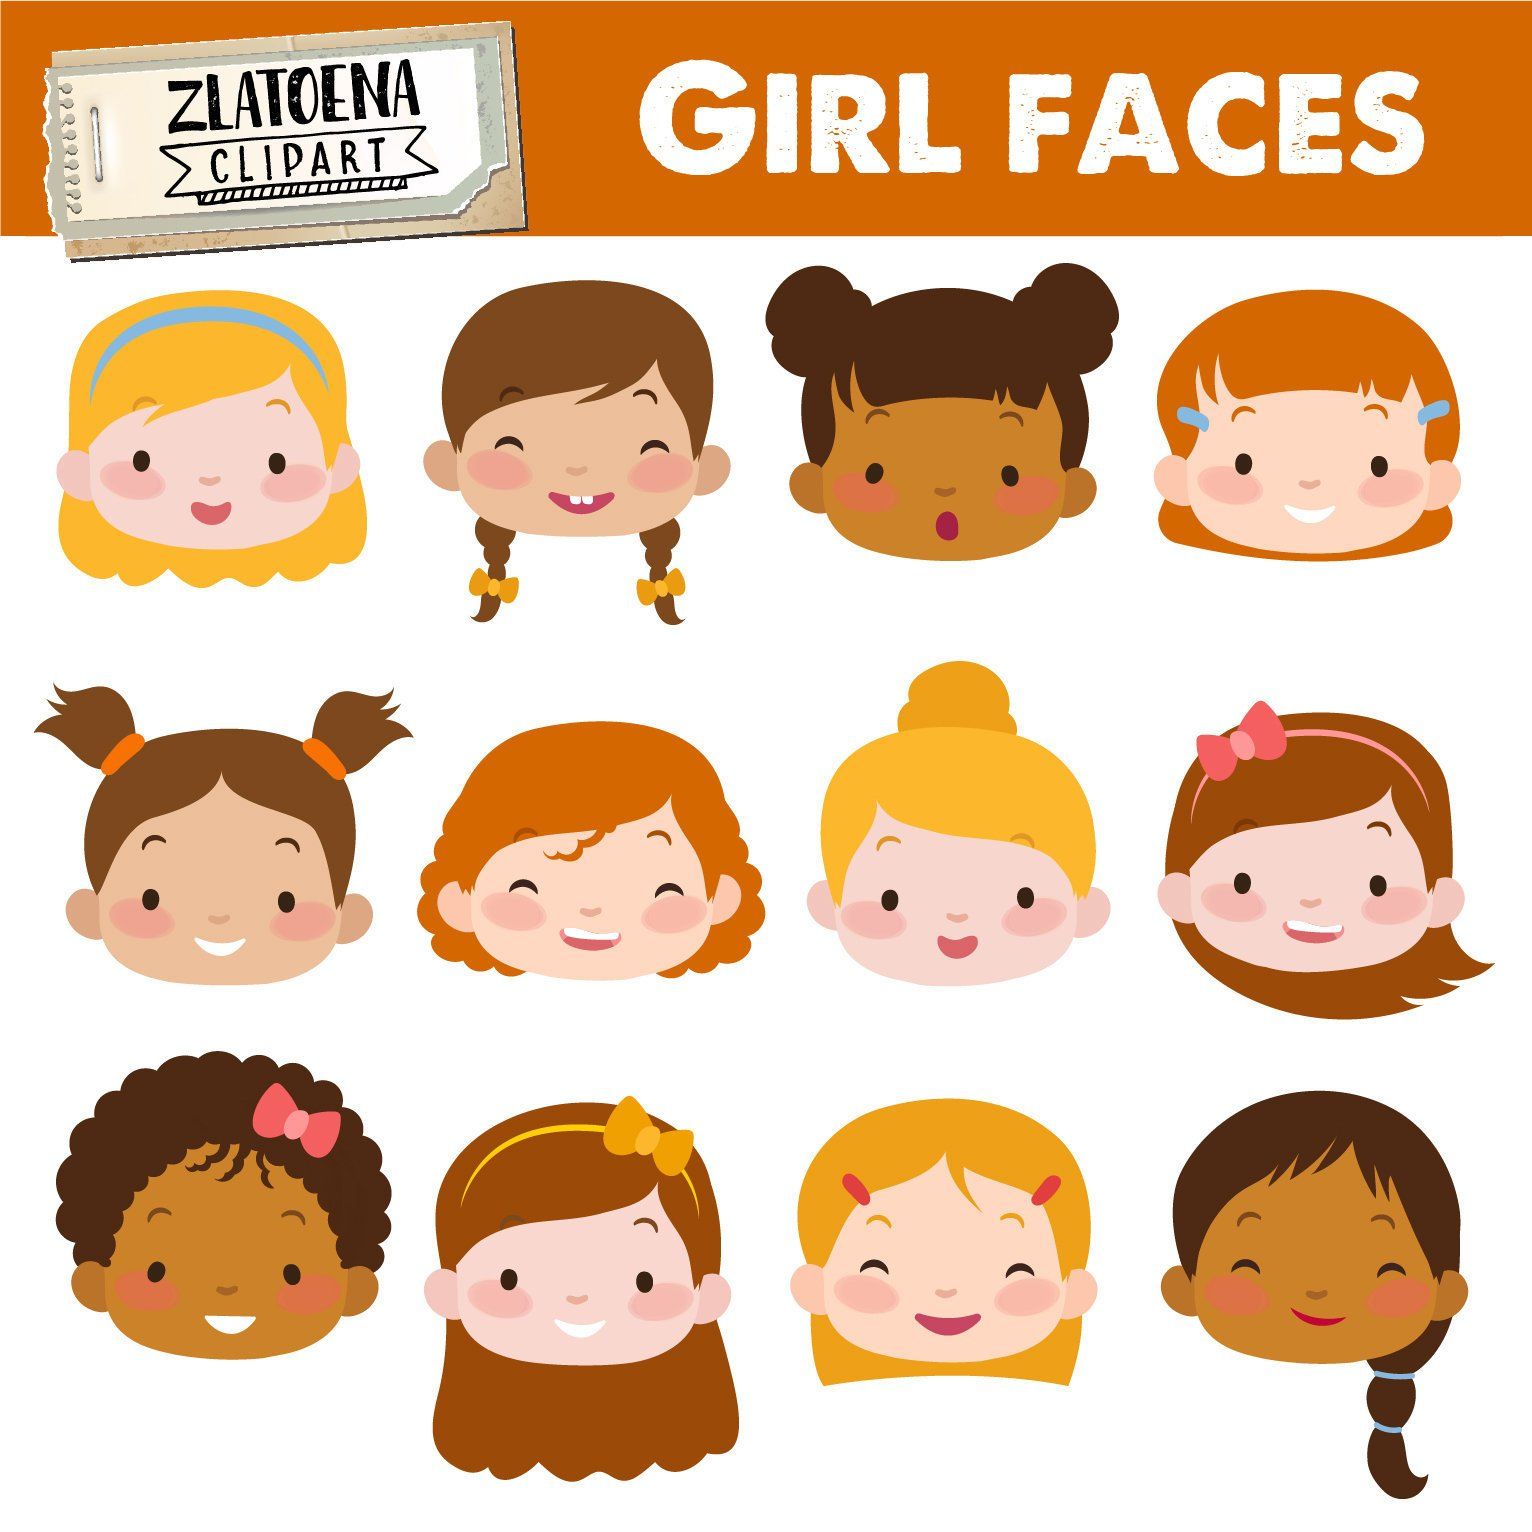 Cute girl faces.